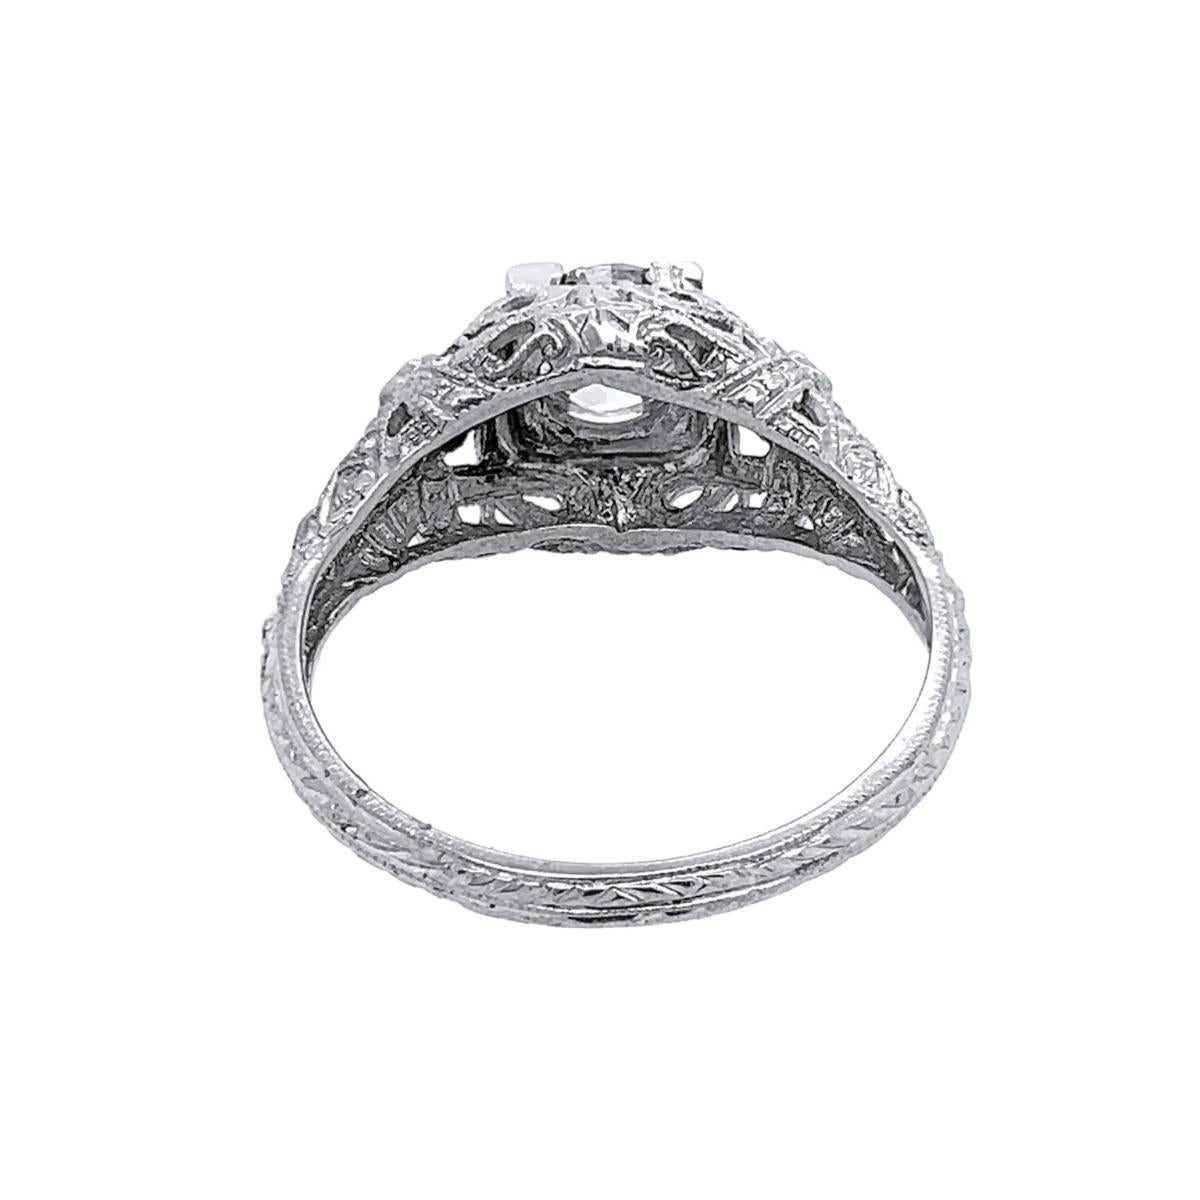 Women's Art Deco 18 Karat White Gold Filigree Centre Ring Old European Cut Diamond Ring For Sale